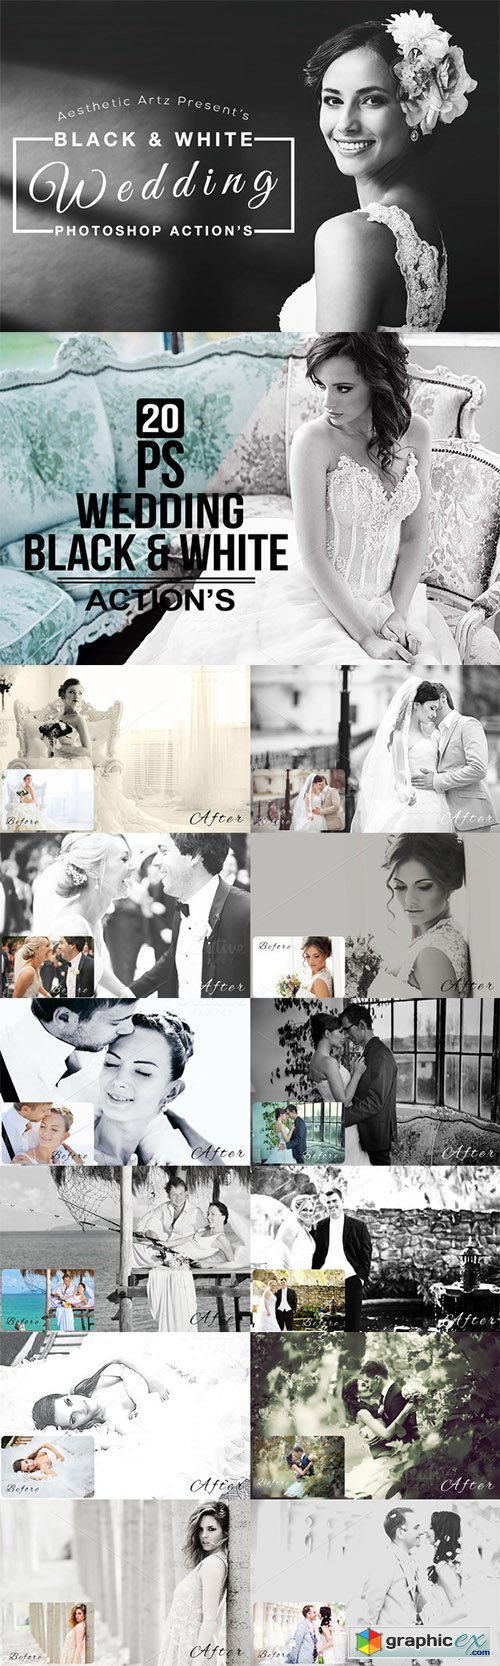 Black & White Wedding Actions